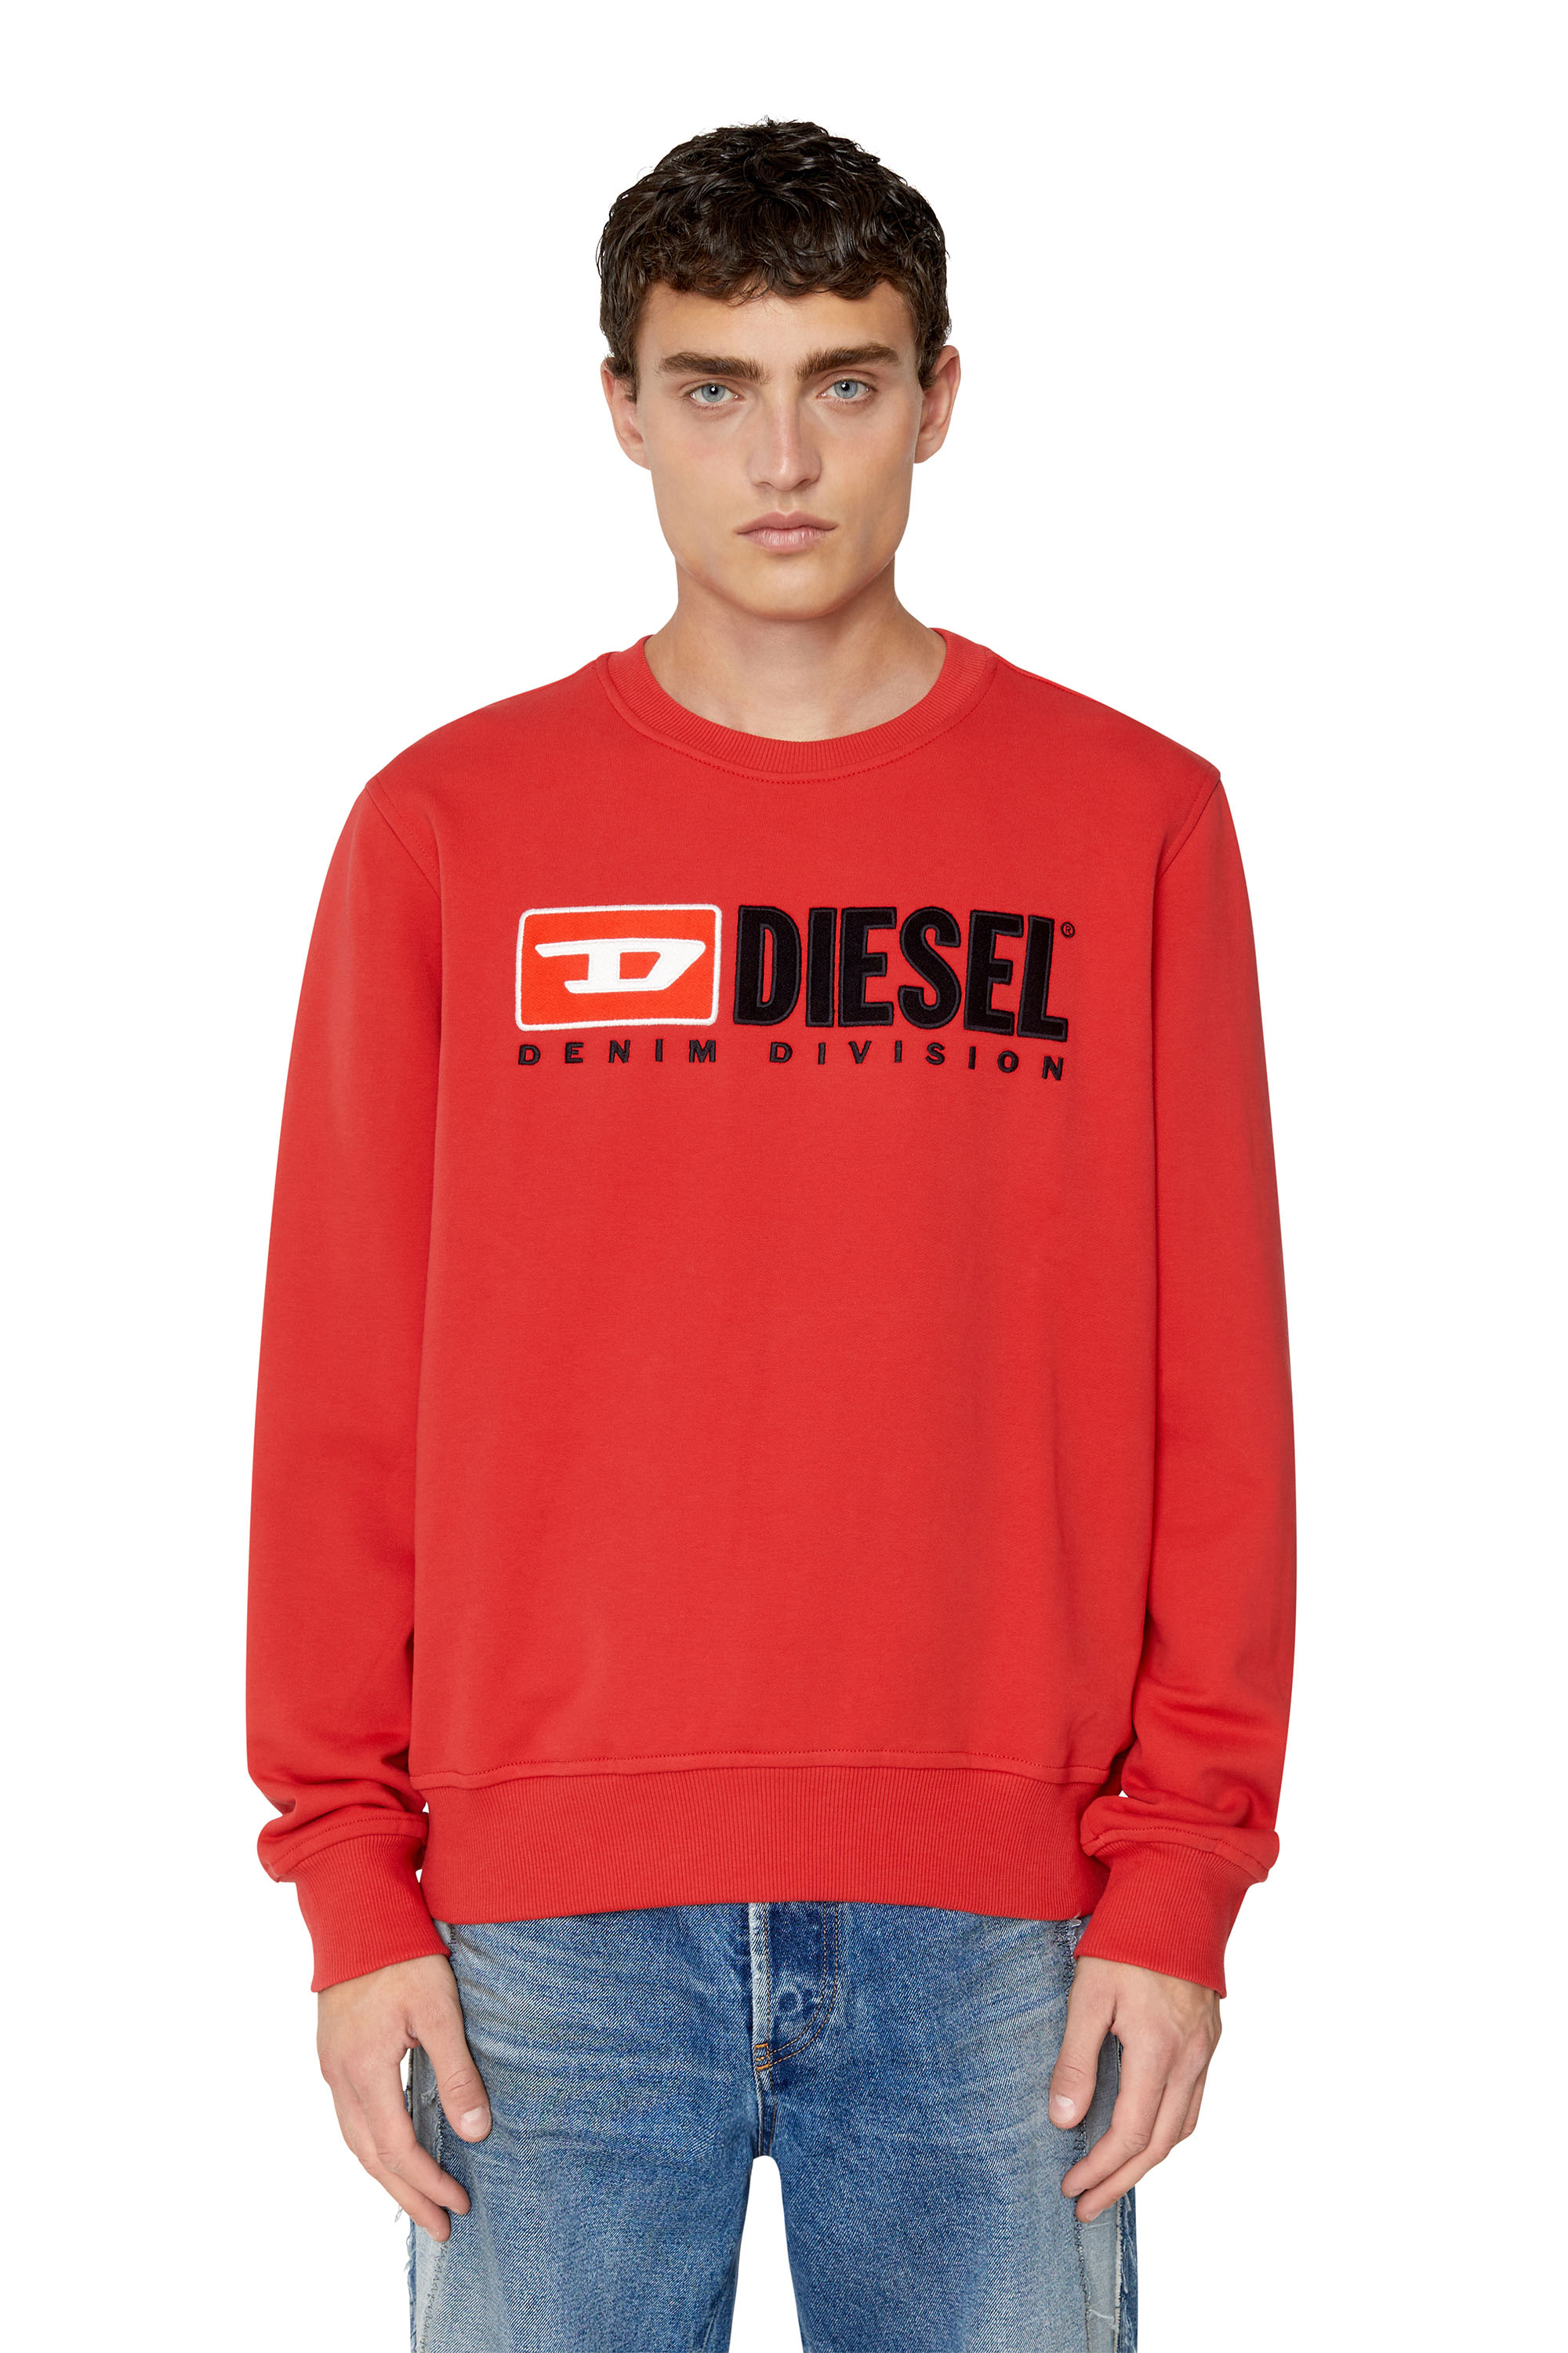 Diesel - S-GINN-DIV, Rosso - Image 2